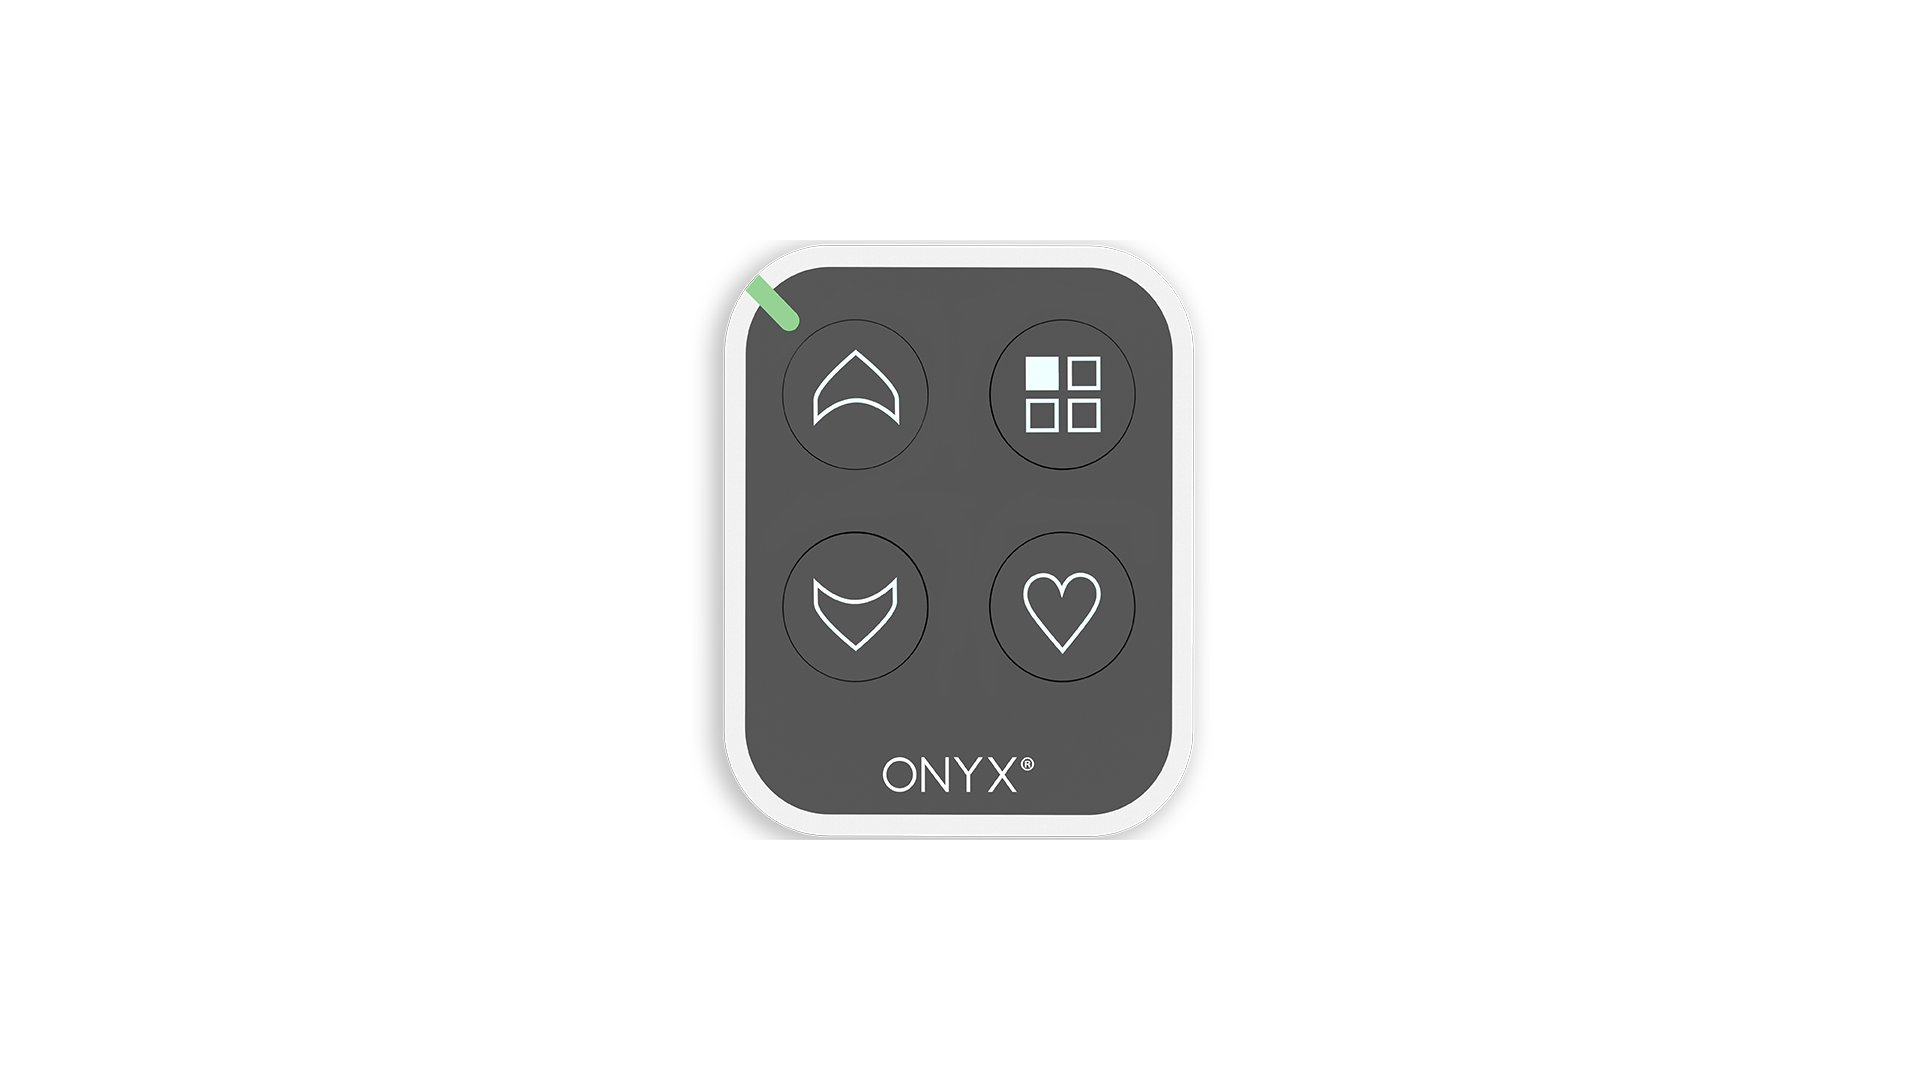 w-onyx-click-r-014